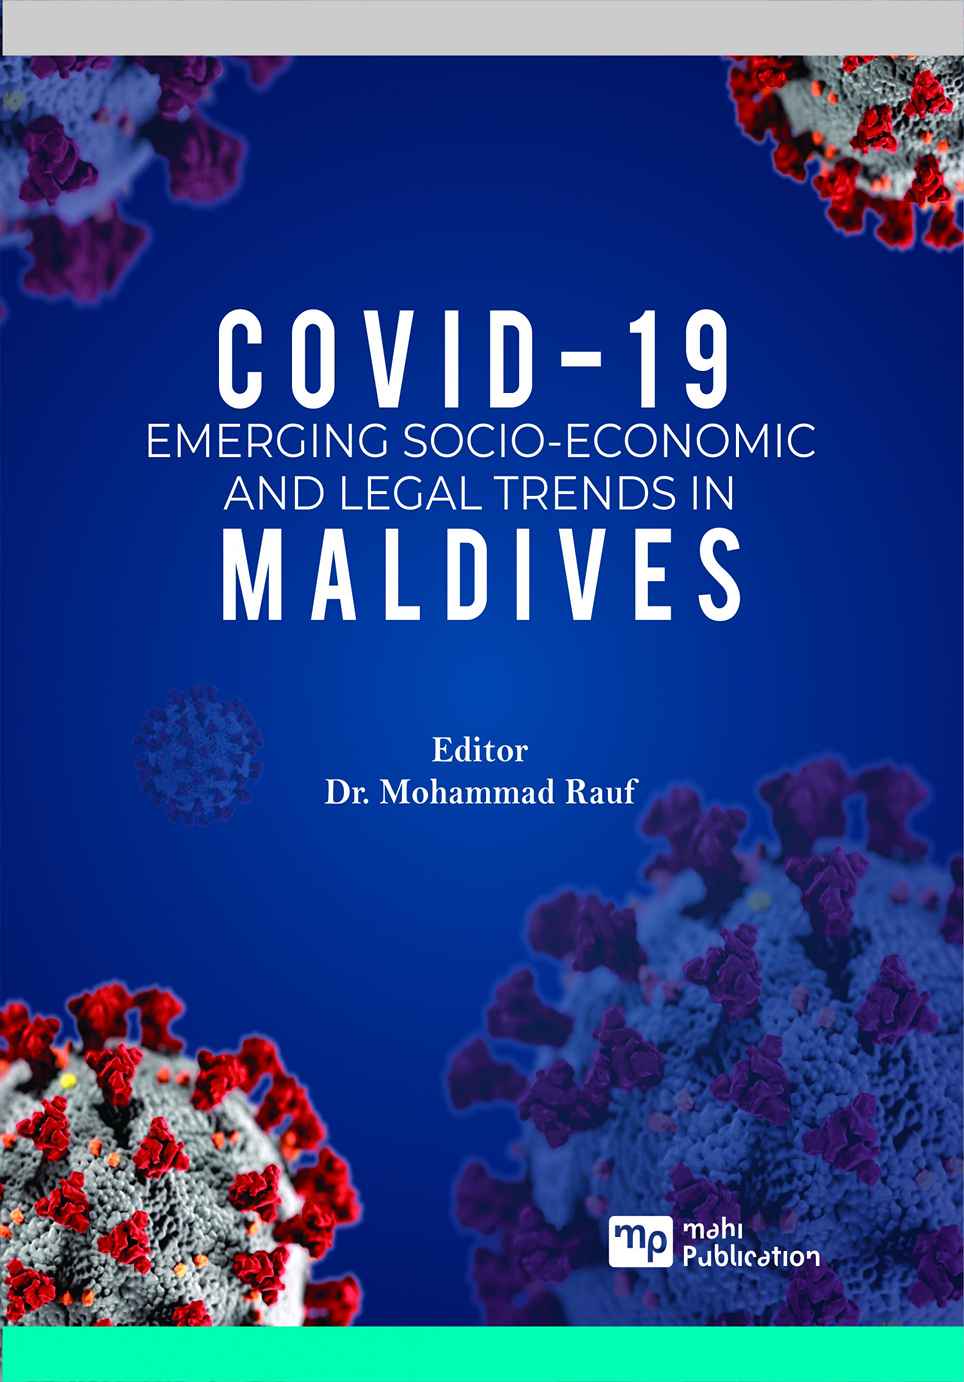 Covid-19 And Emerging Socio-Economic And Legal Trends In Maldives